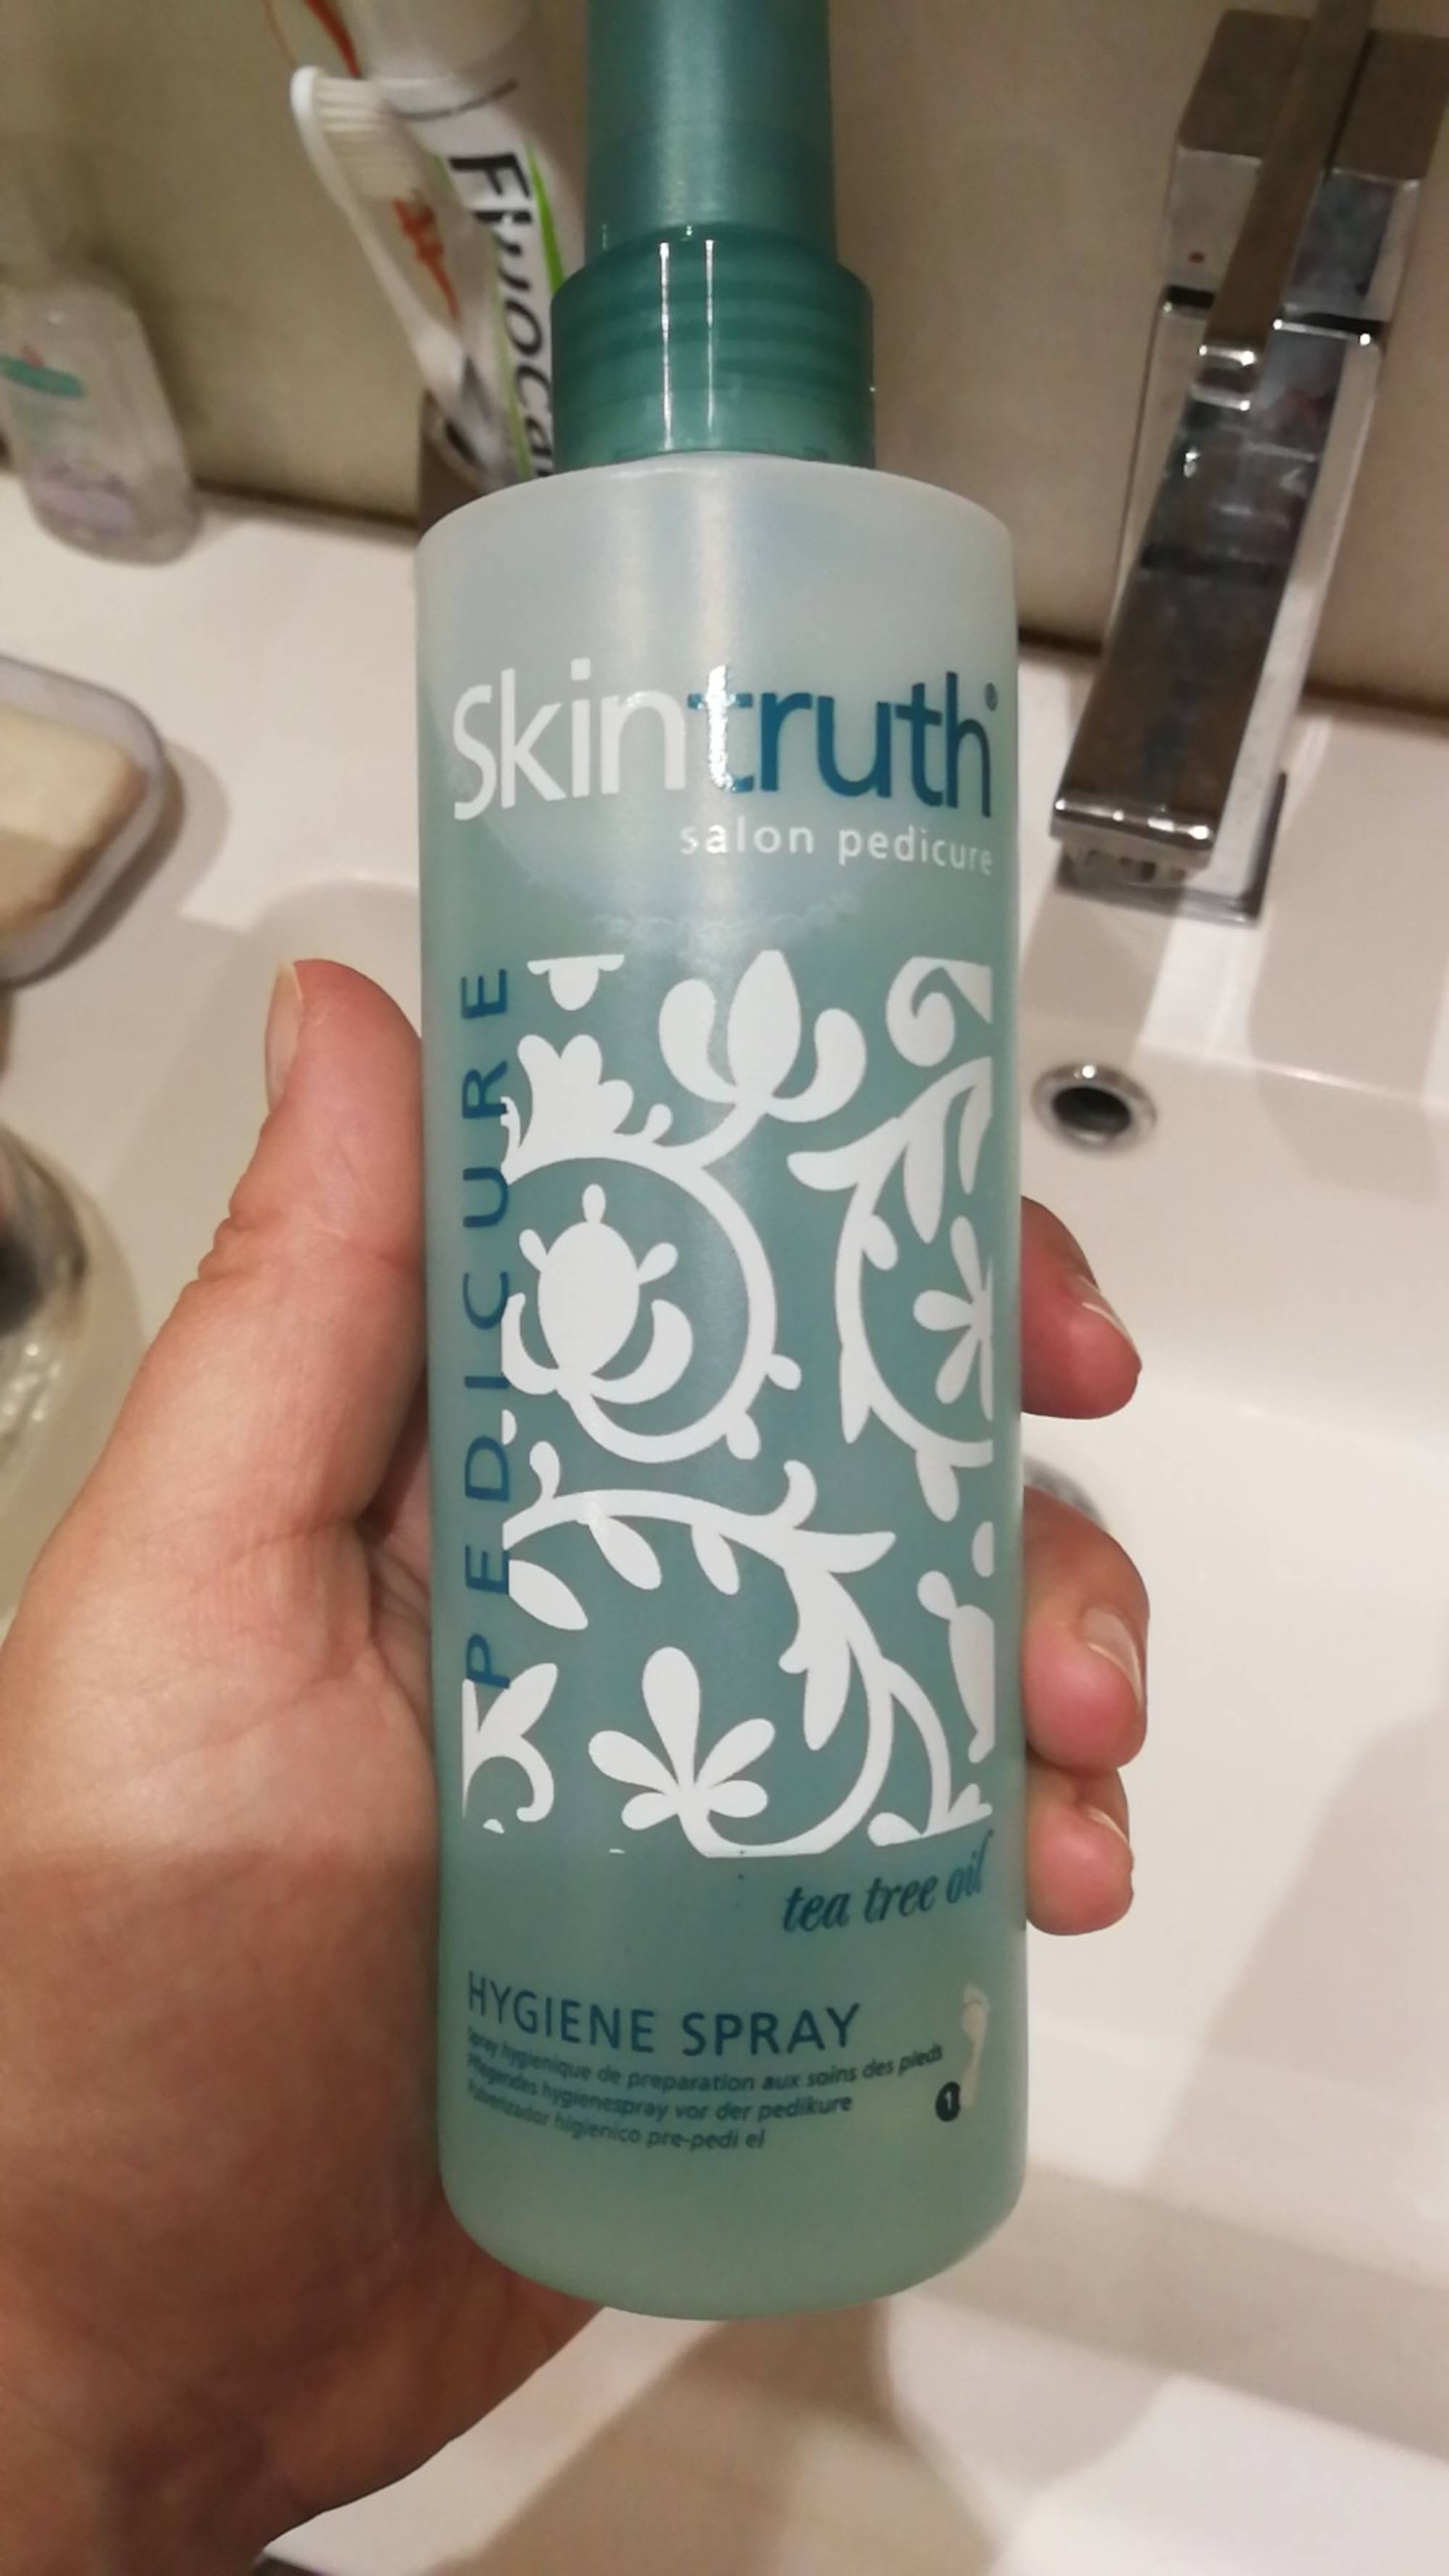 SKINTRUTH - Pedicure - Hygiène spray 